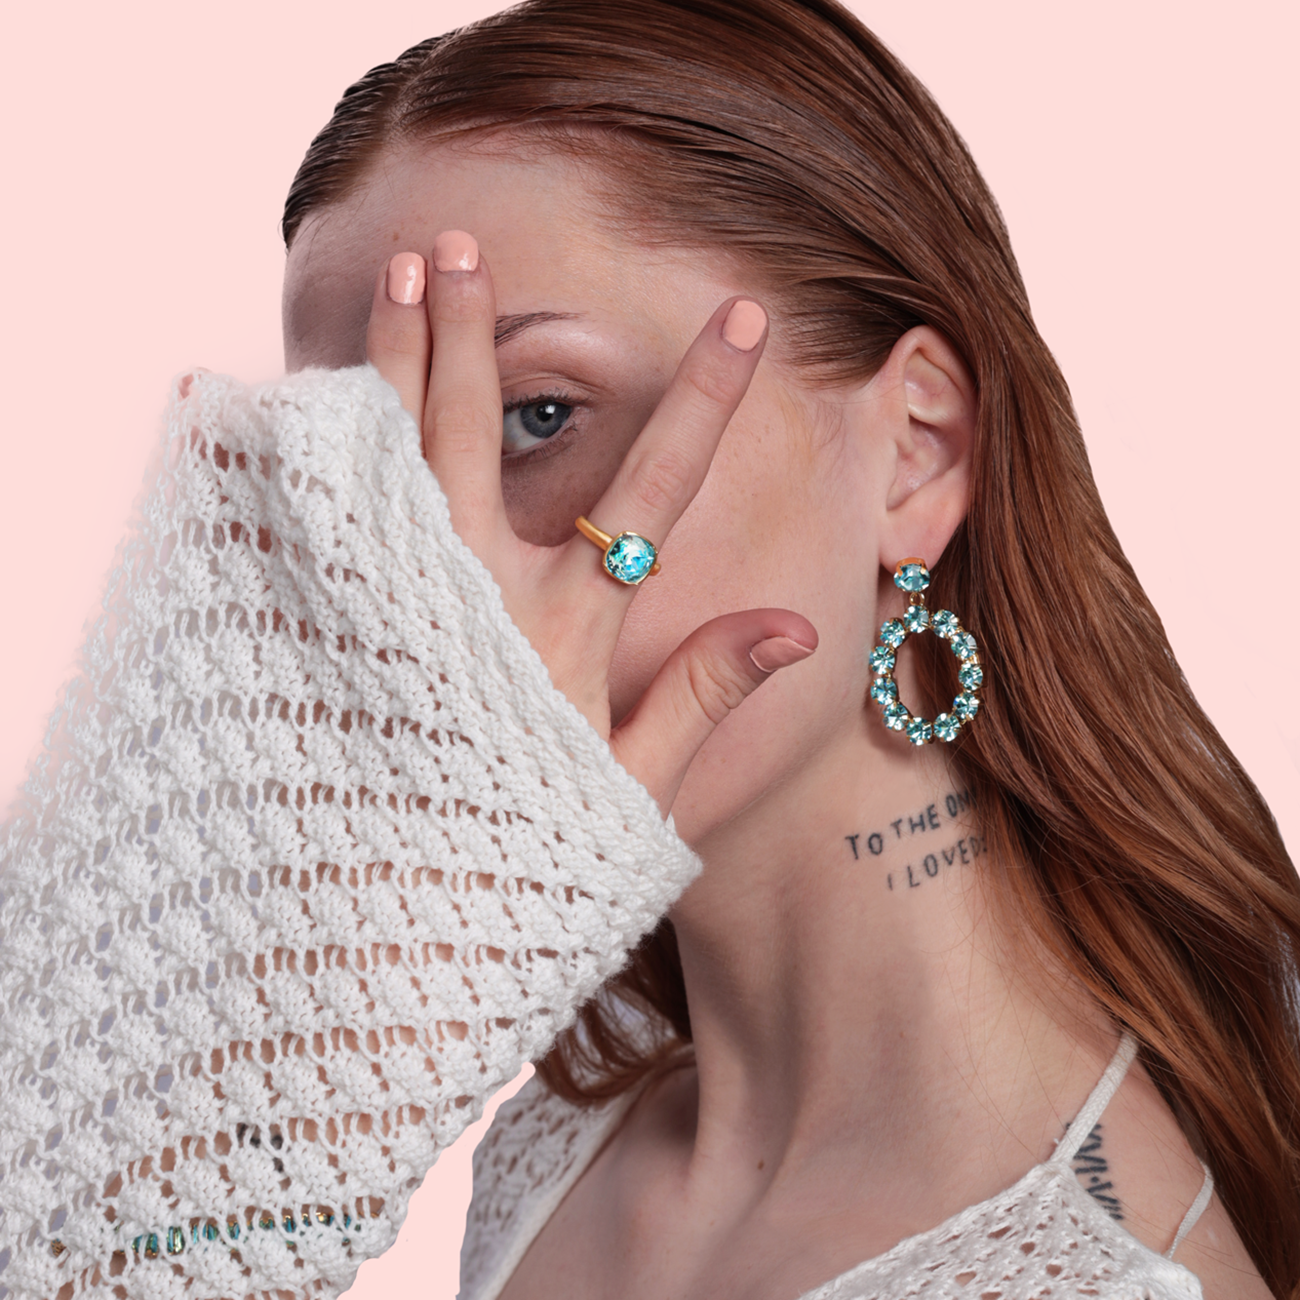 Camilla Swarovski earrings - Ocean blue